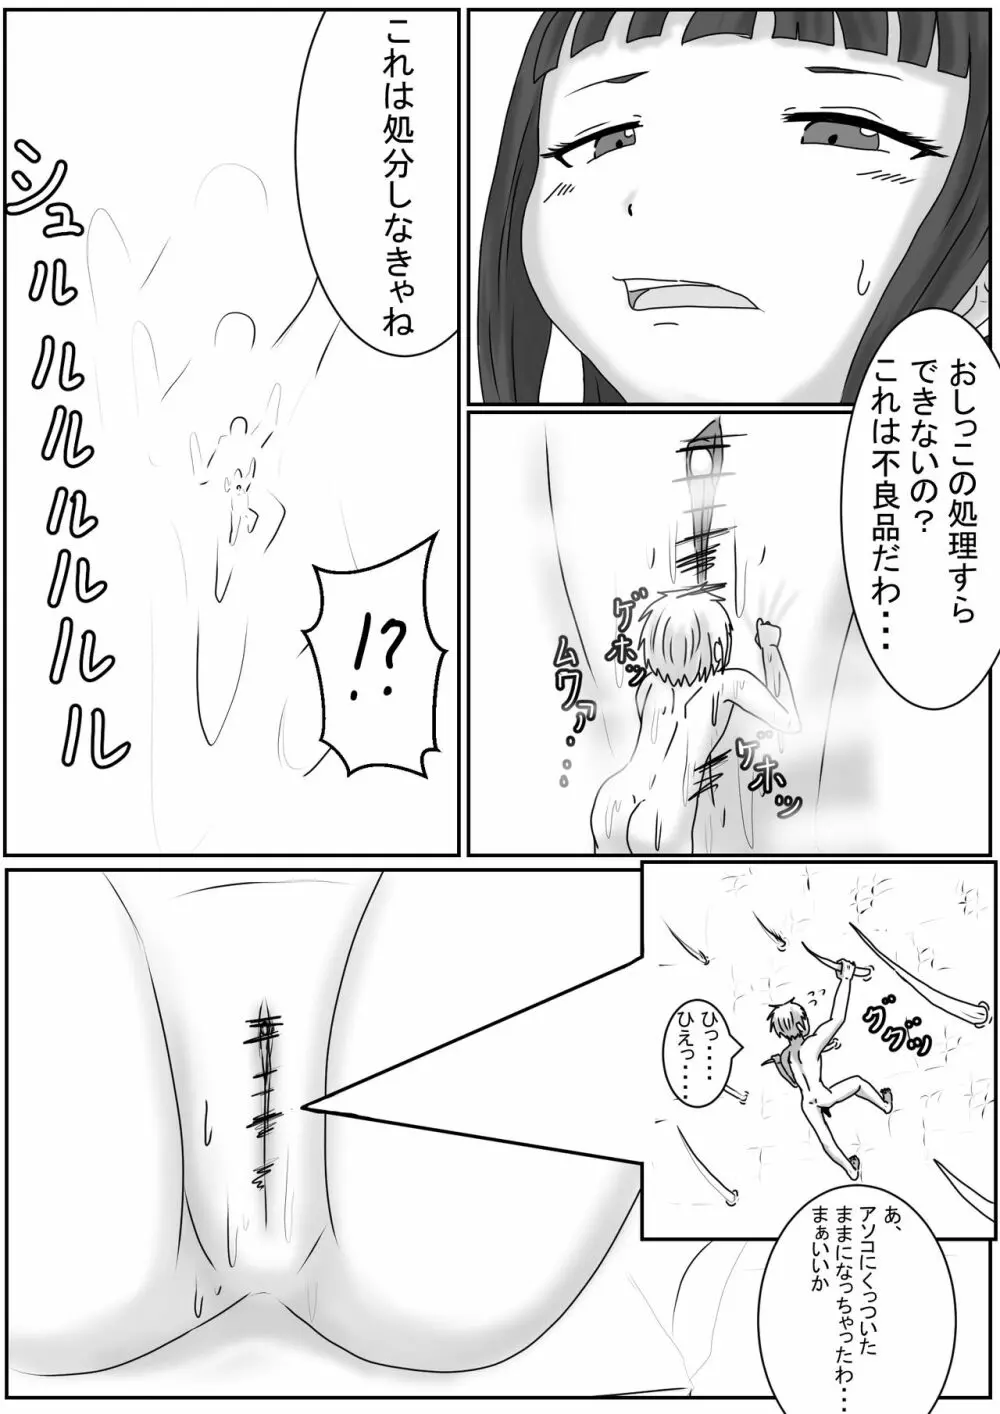 Hiroko, Tamari, Yae's dwarf play - page7